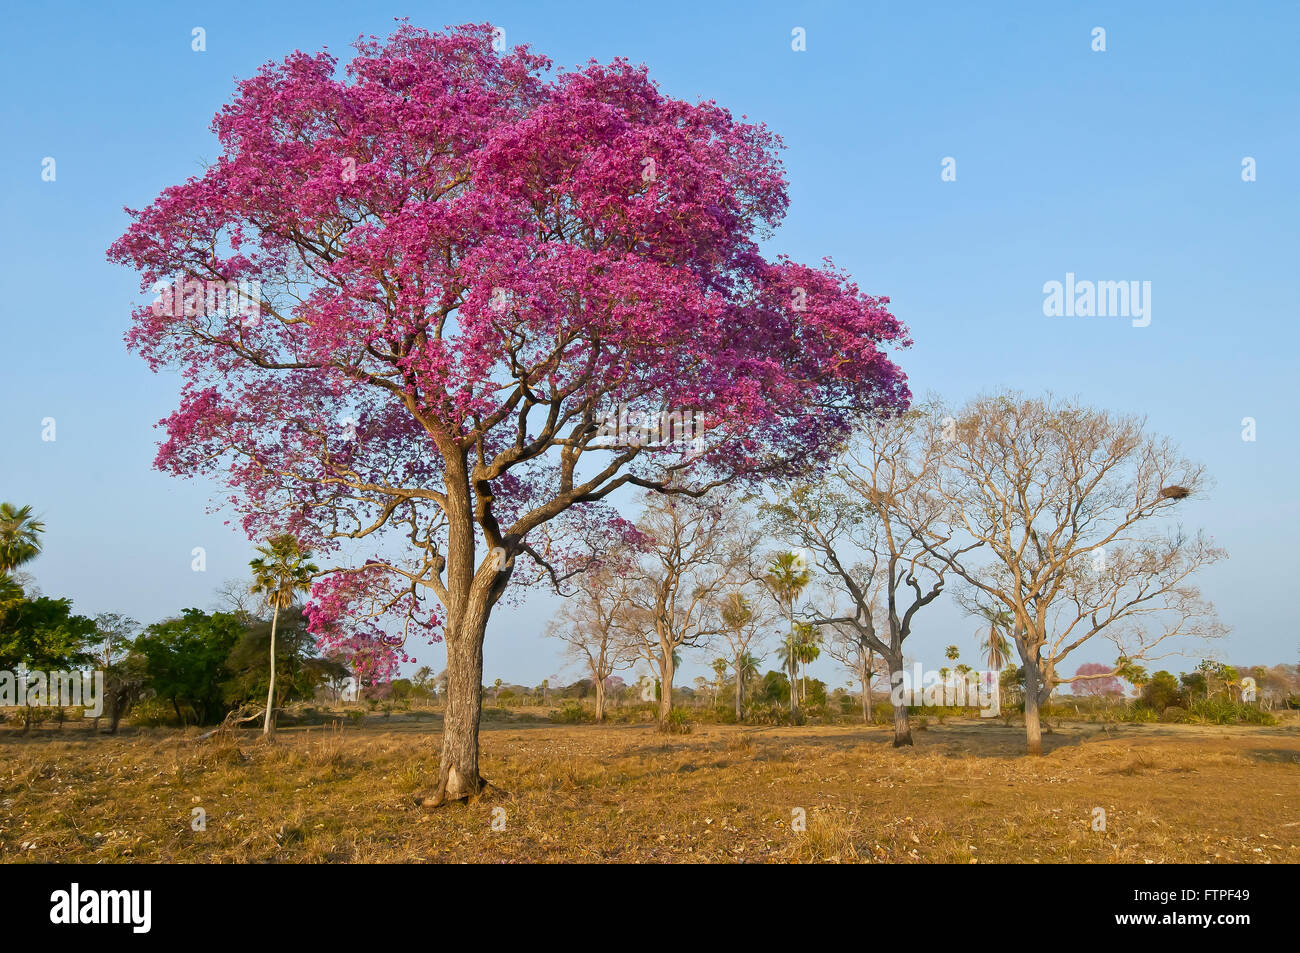 IPE Ipe-lila oder pink genannt auch Piuva das Pantanal - Tabebuia sp Stockfoto